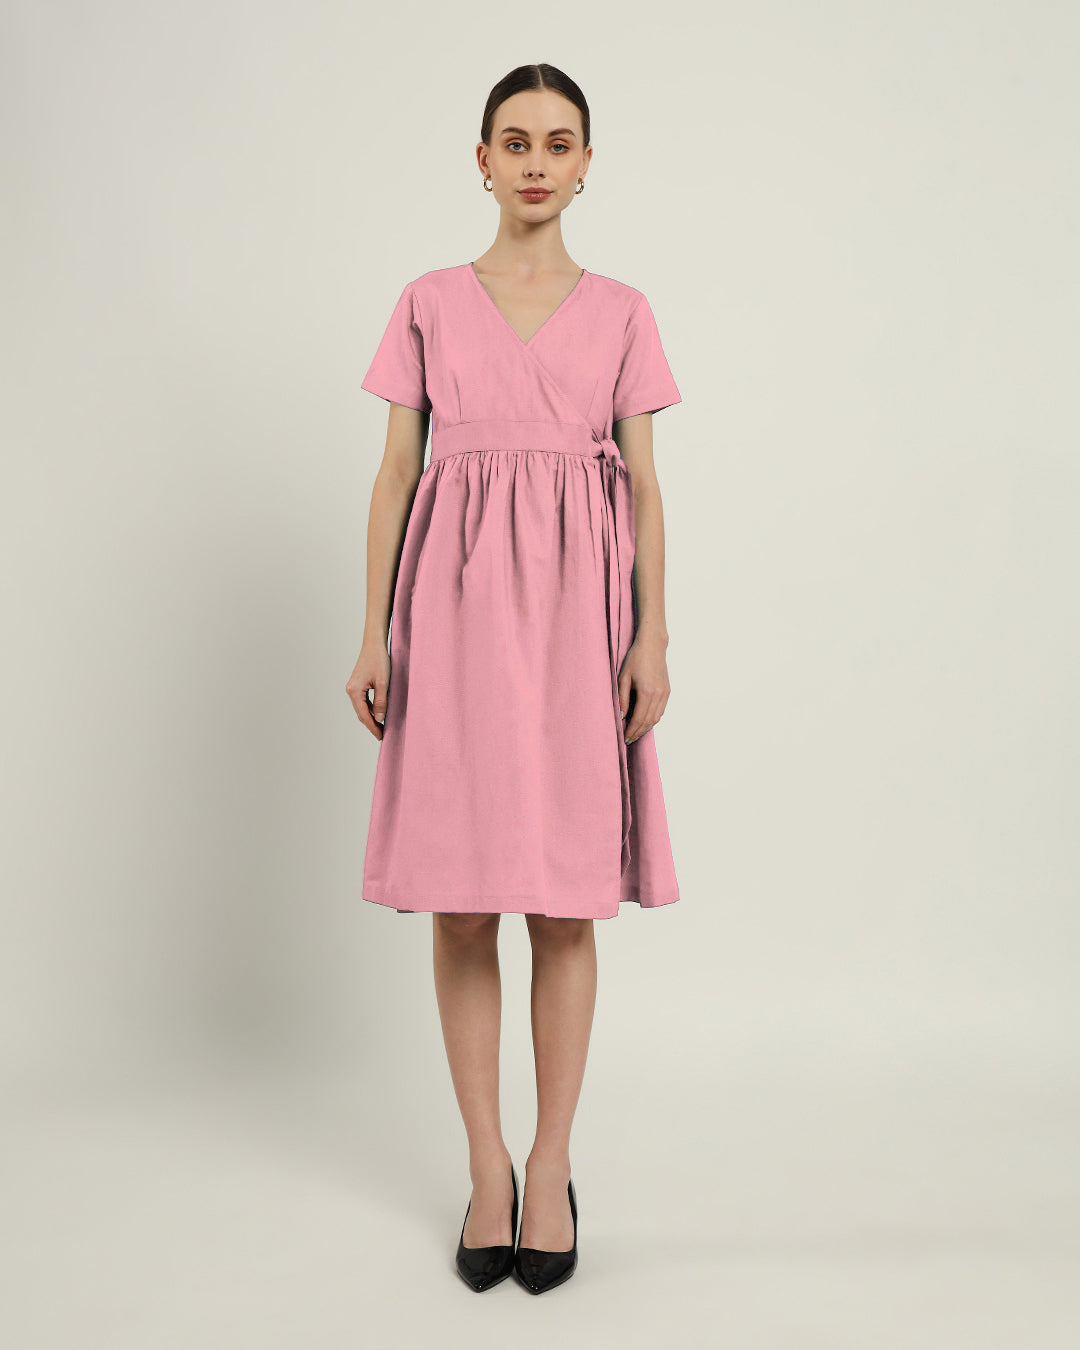 The Miyoshi Fondant Pink Dress